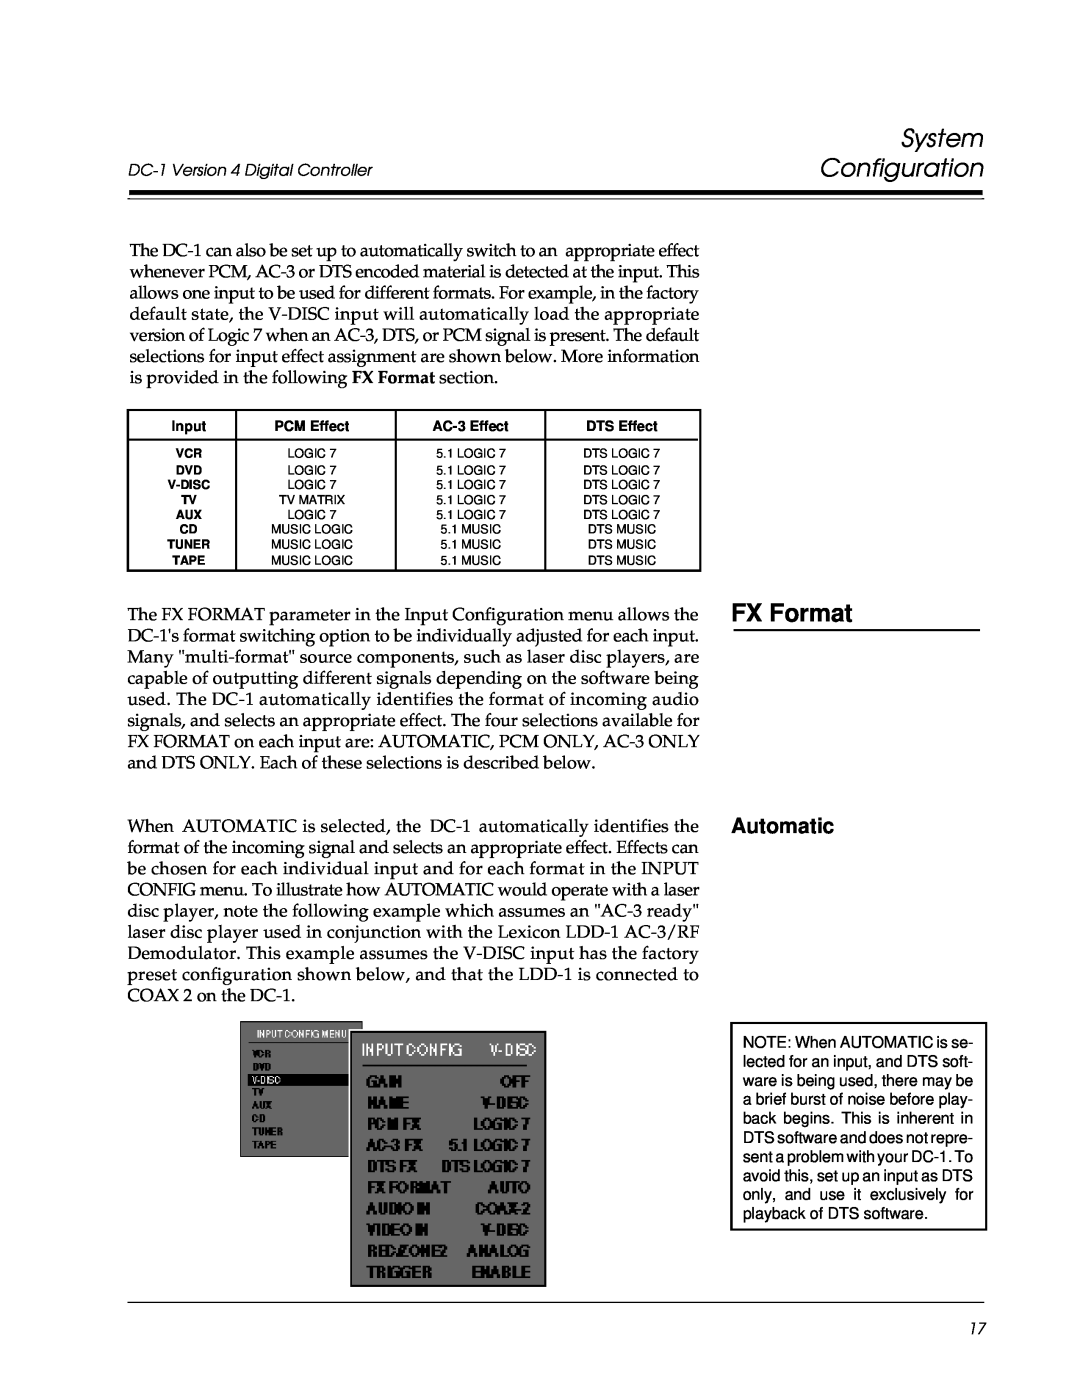 Lexicon Lexicon Part #070-13234 owner manual Automatic, System Configuration, DC-1Version 4 Digital Controller 